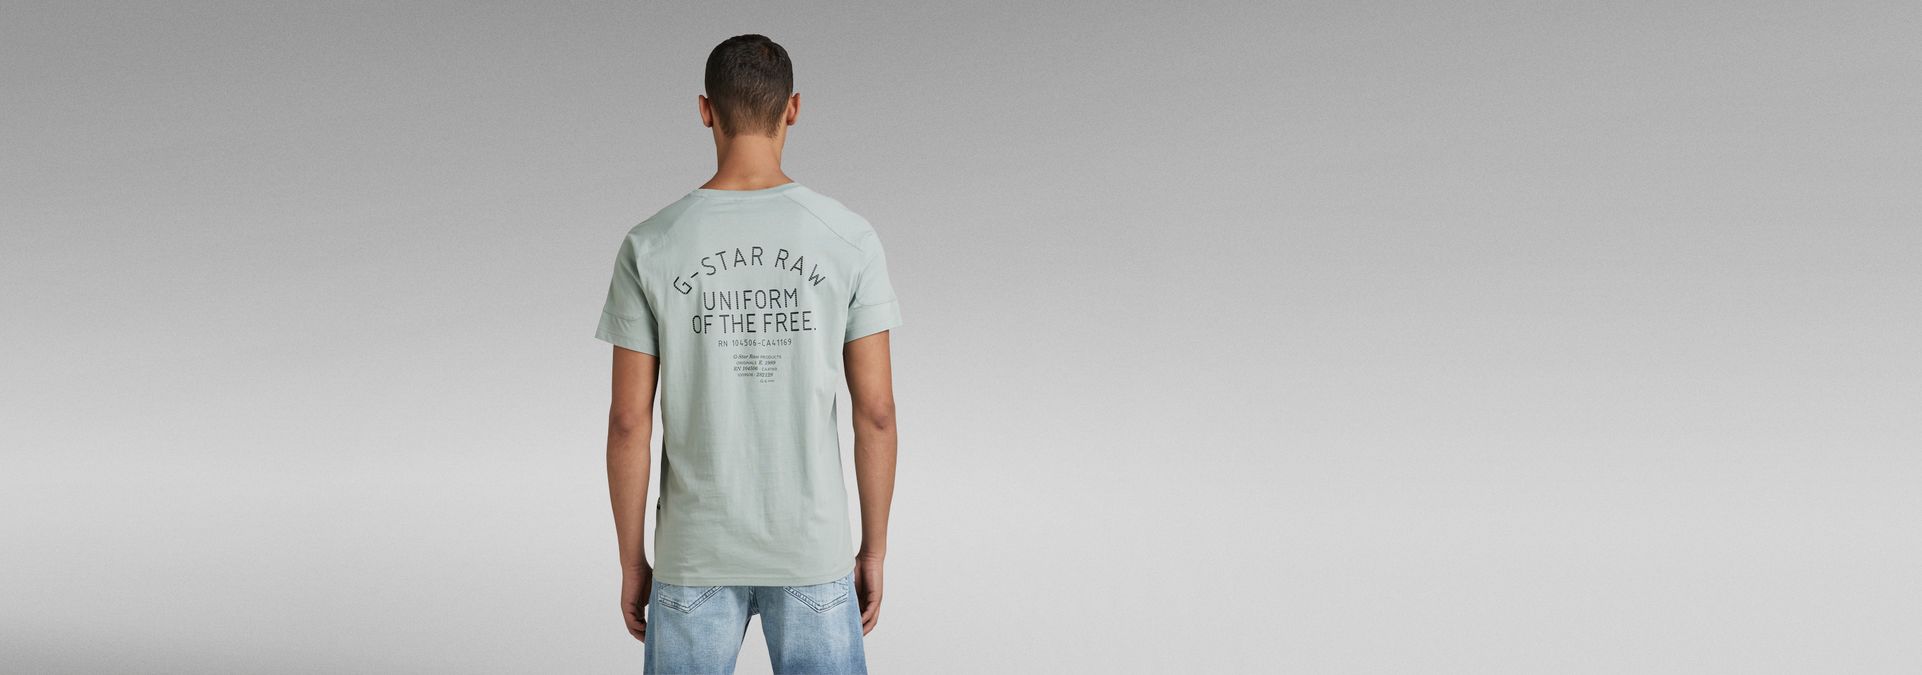 G-STAR RAW Korpaz Graphic T-Shirt Camiseta para Hombre